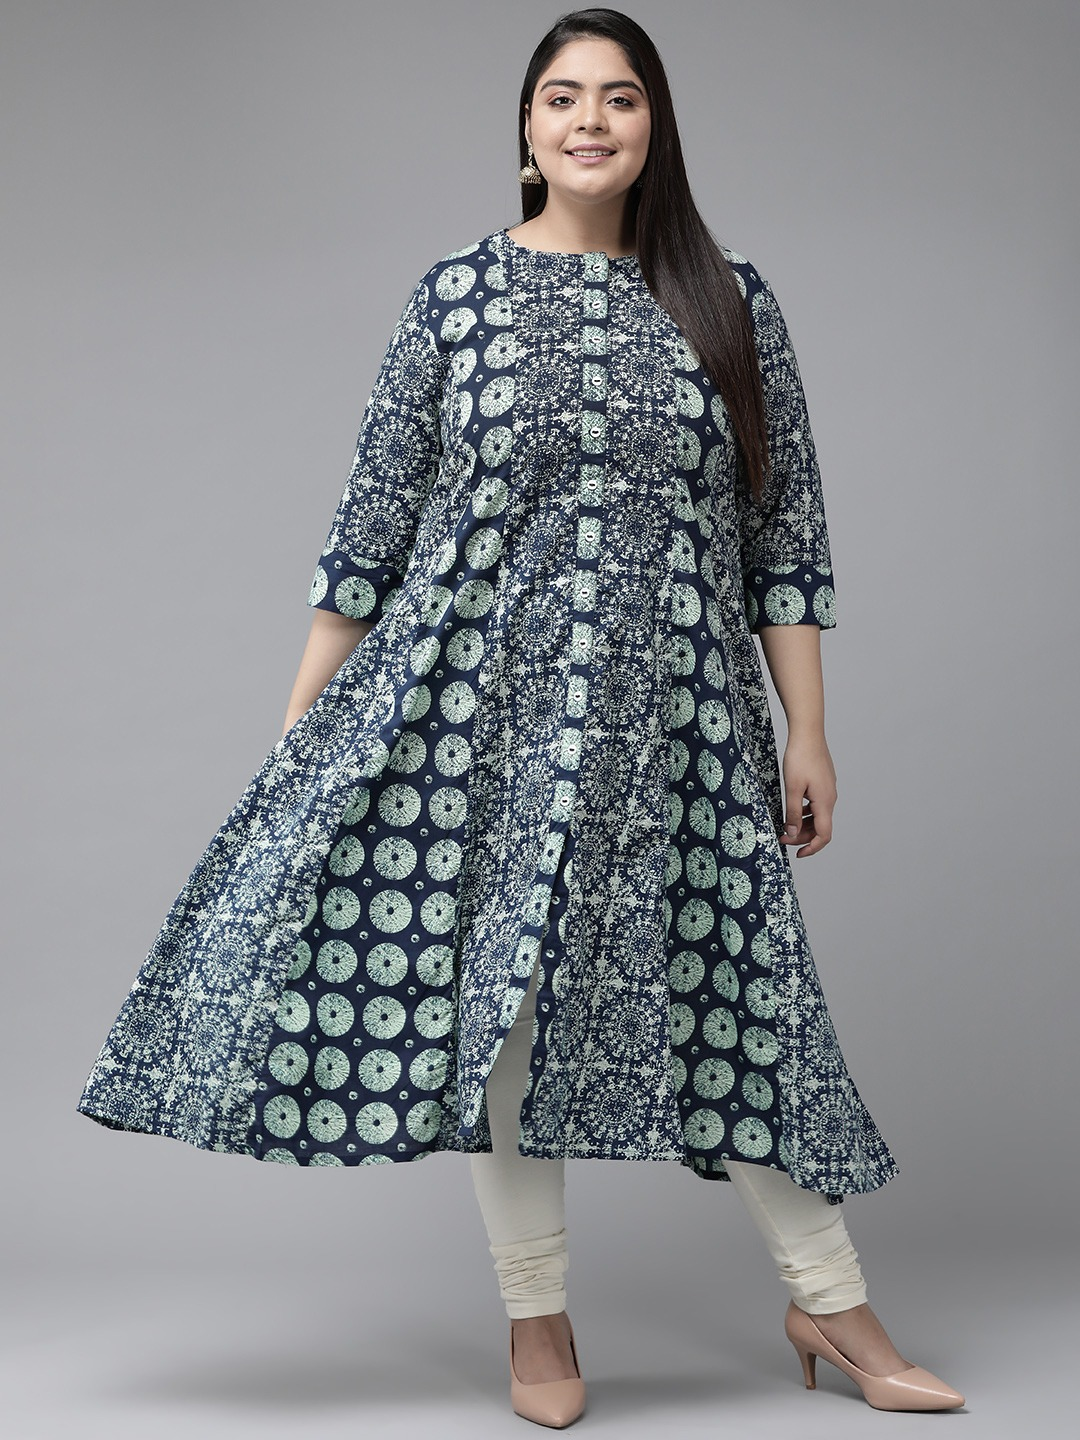 Yash Gallery Women's Cotton Ethnic Motifs Anarkali Kurta (Blue & Sea Green)